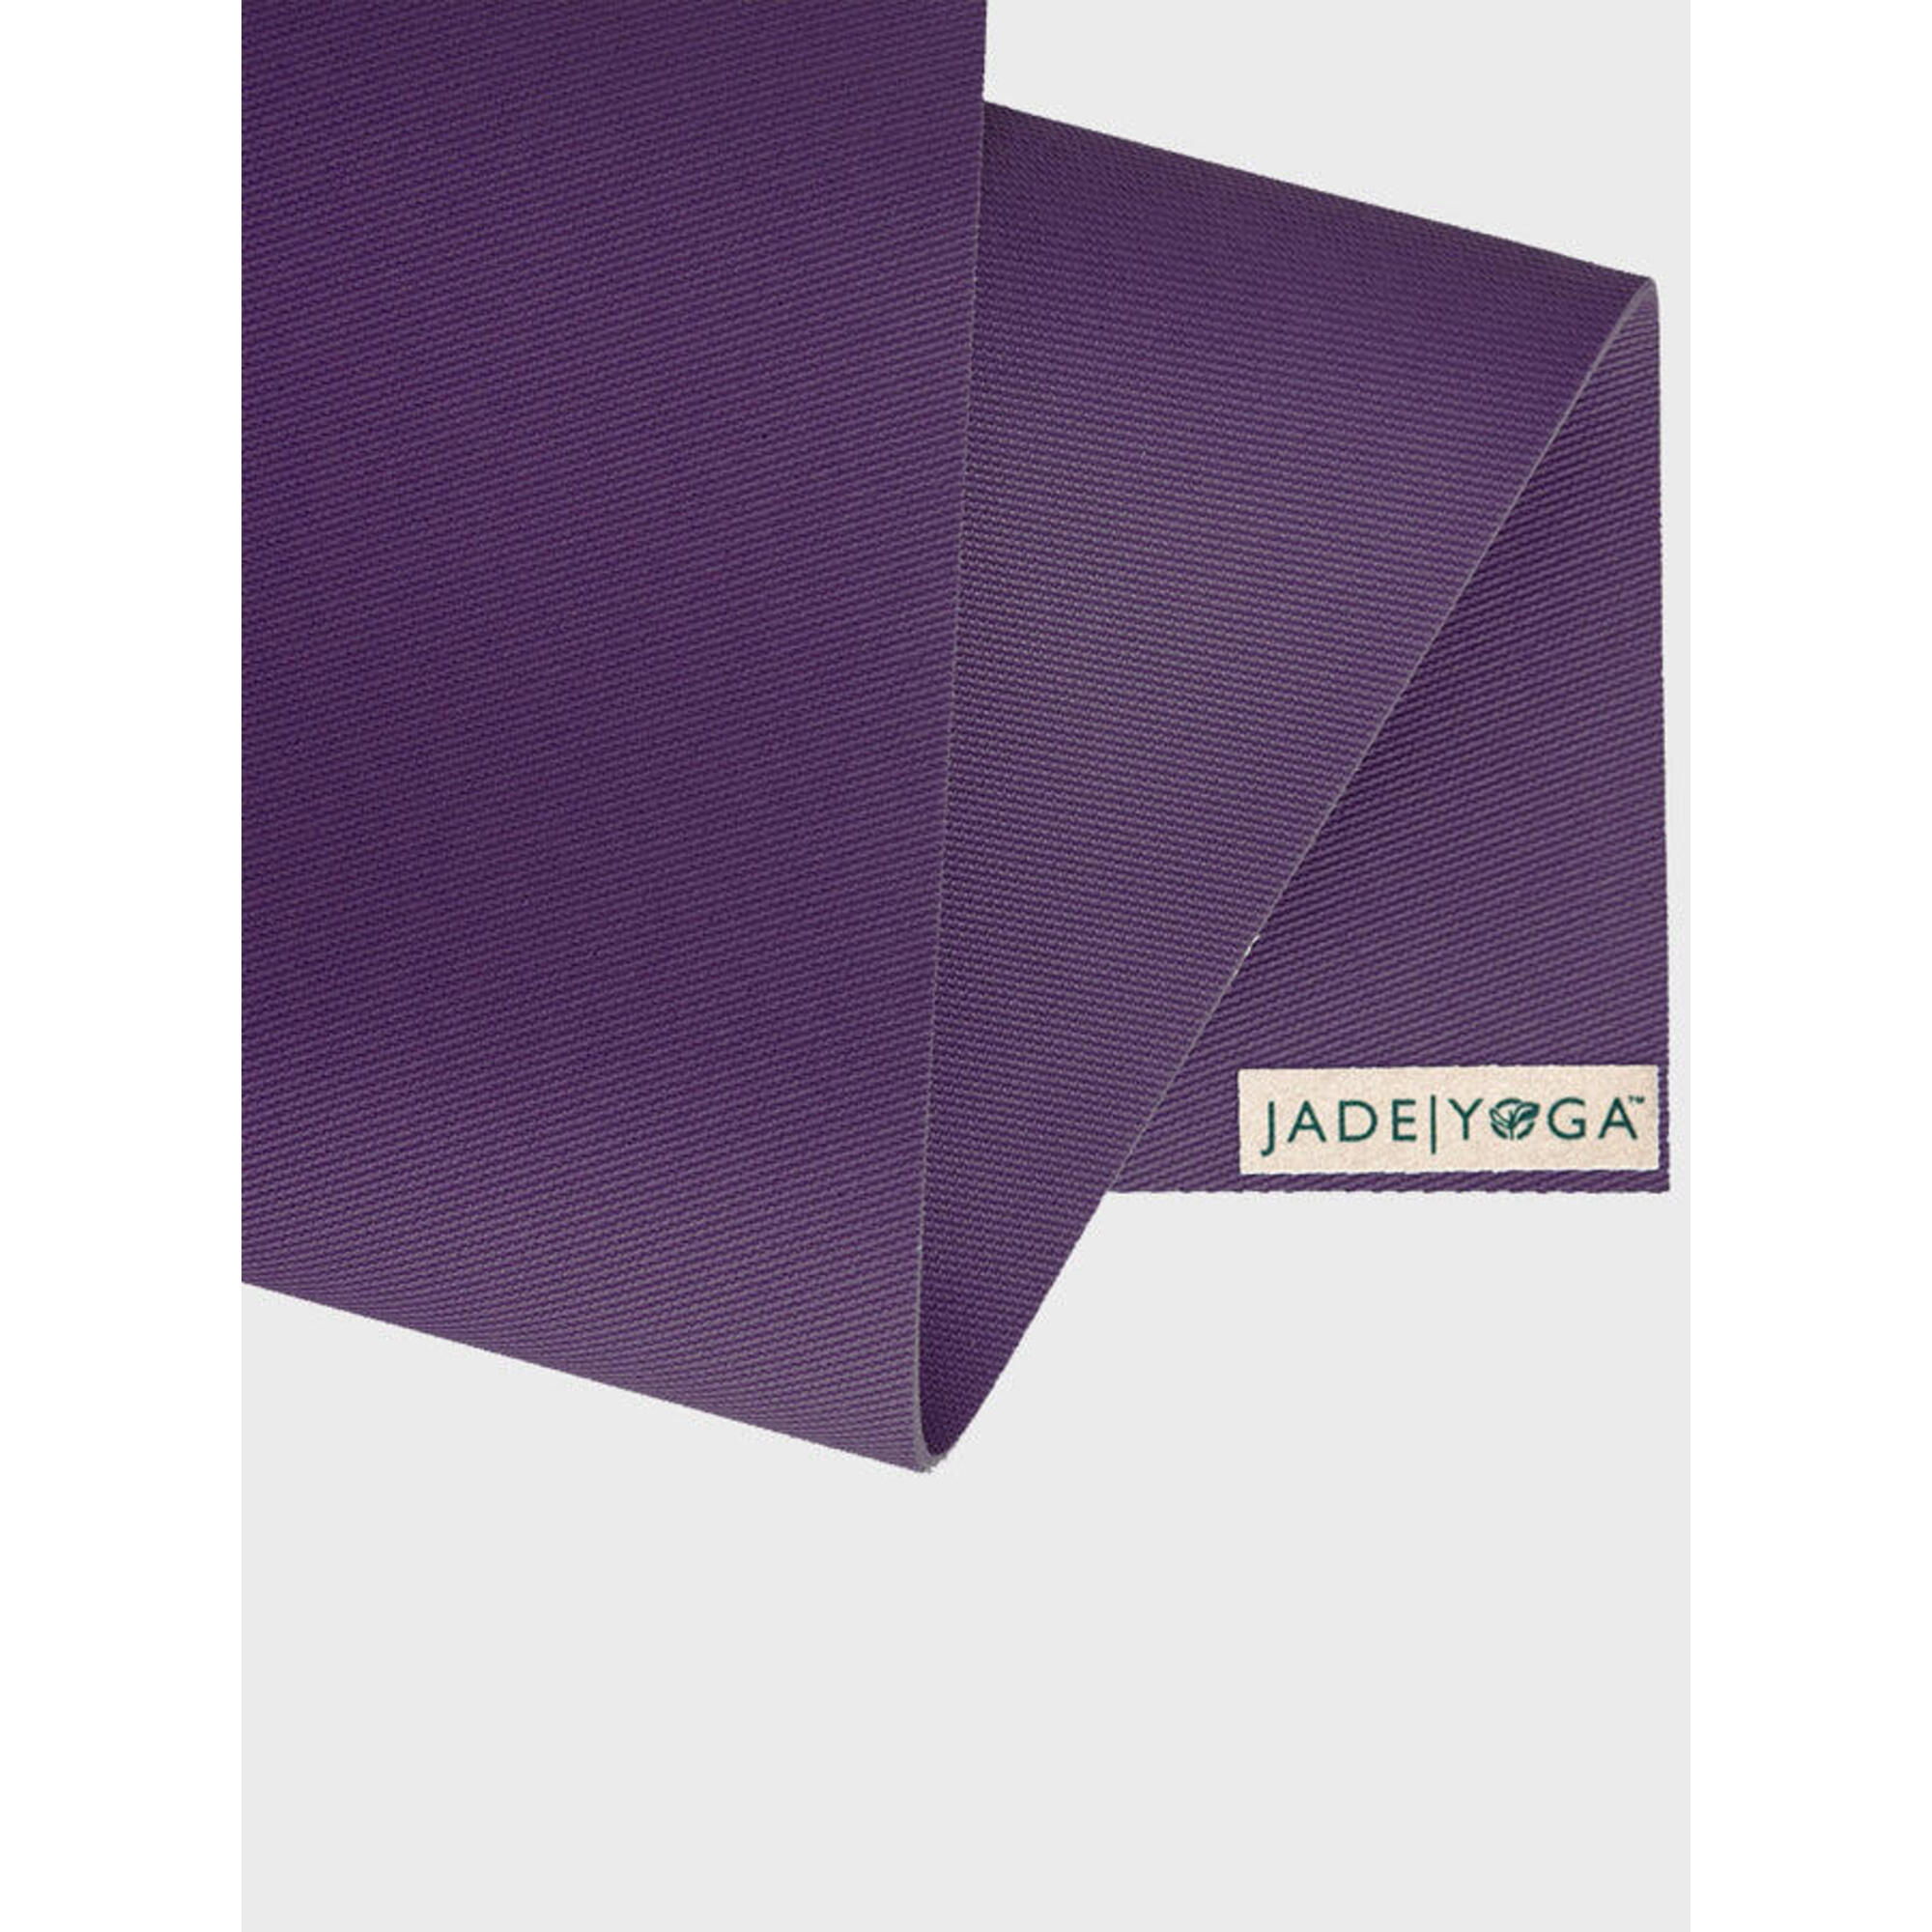 JADE YOGA Jade Yoga Harmony 68 Inch Yoga Mat 5mm - Purple